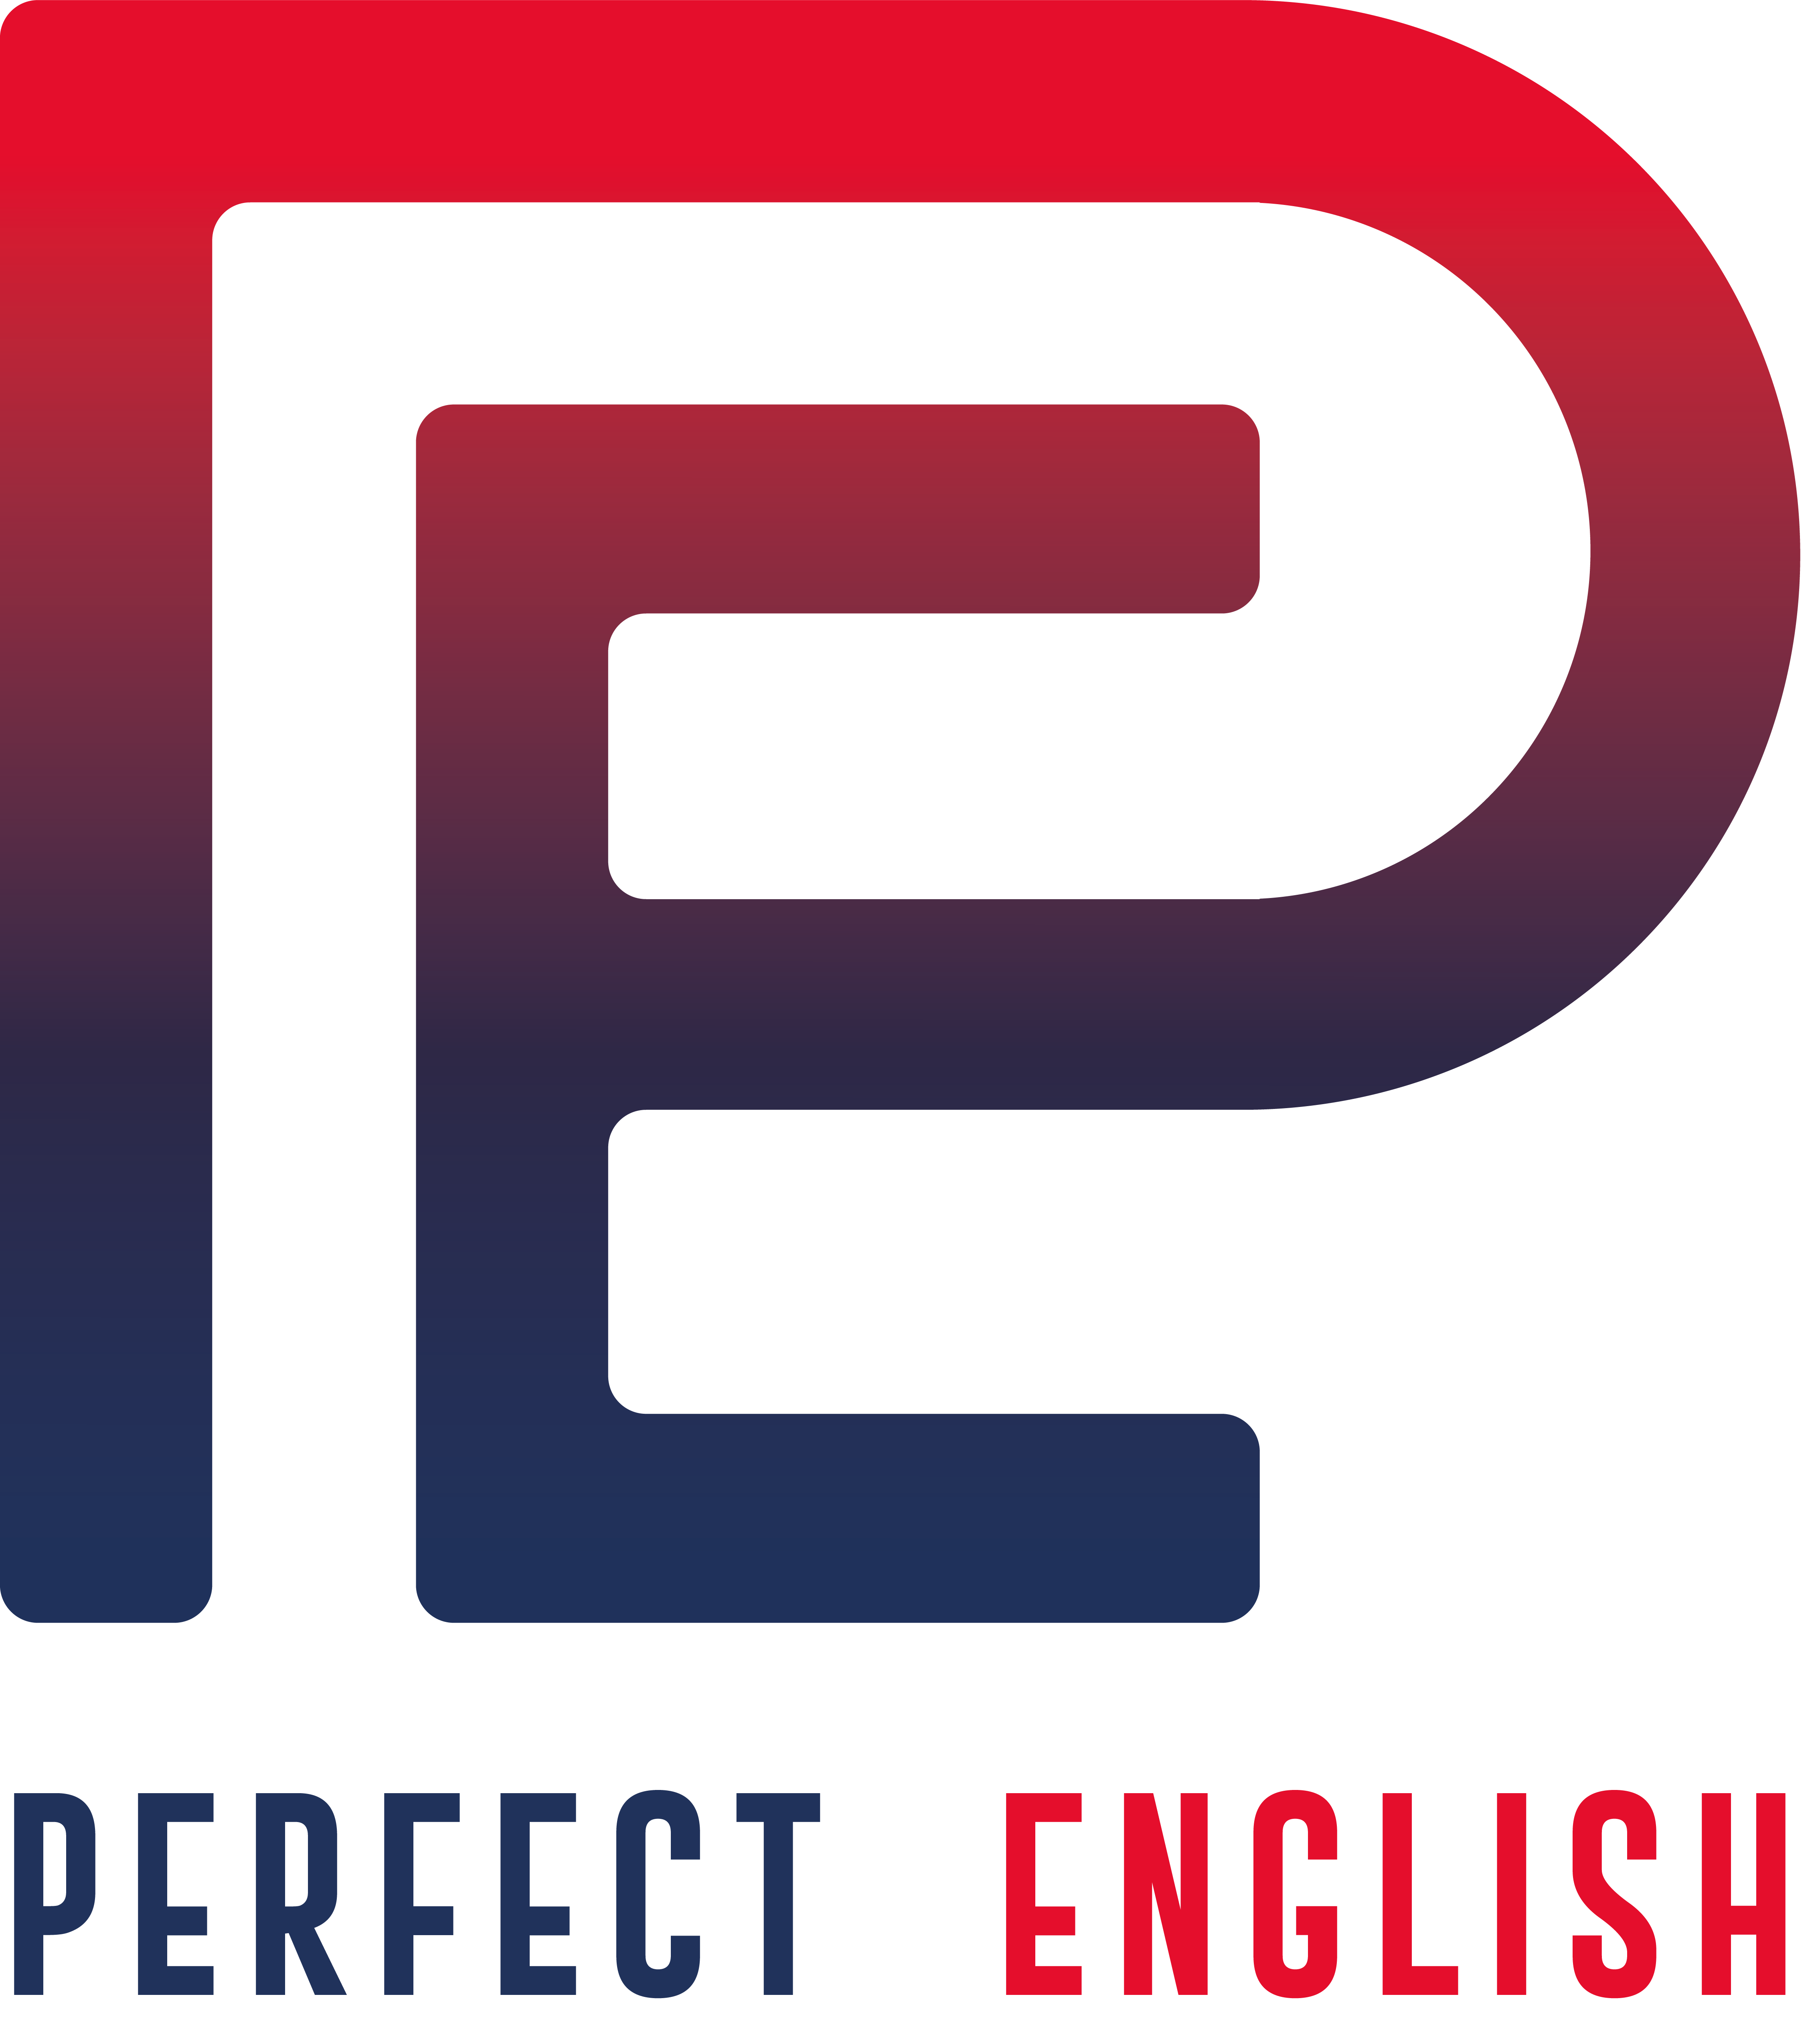 PERFECT ENGLISH